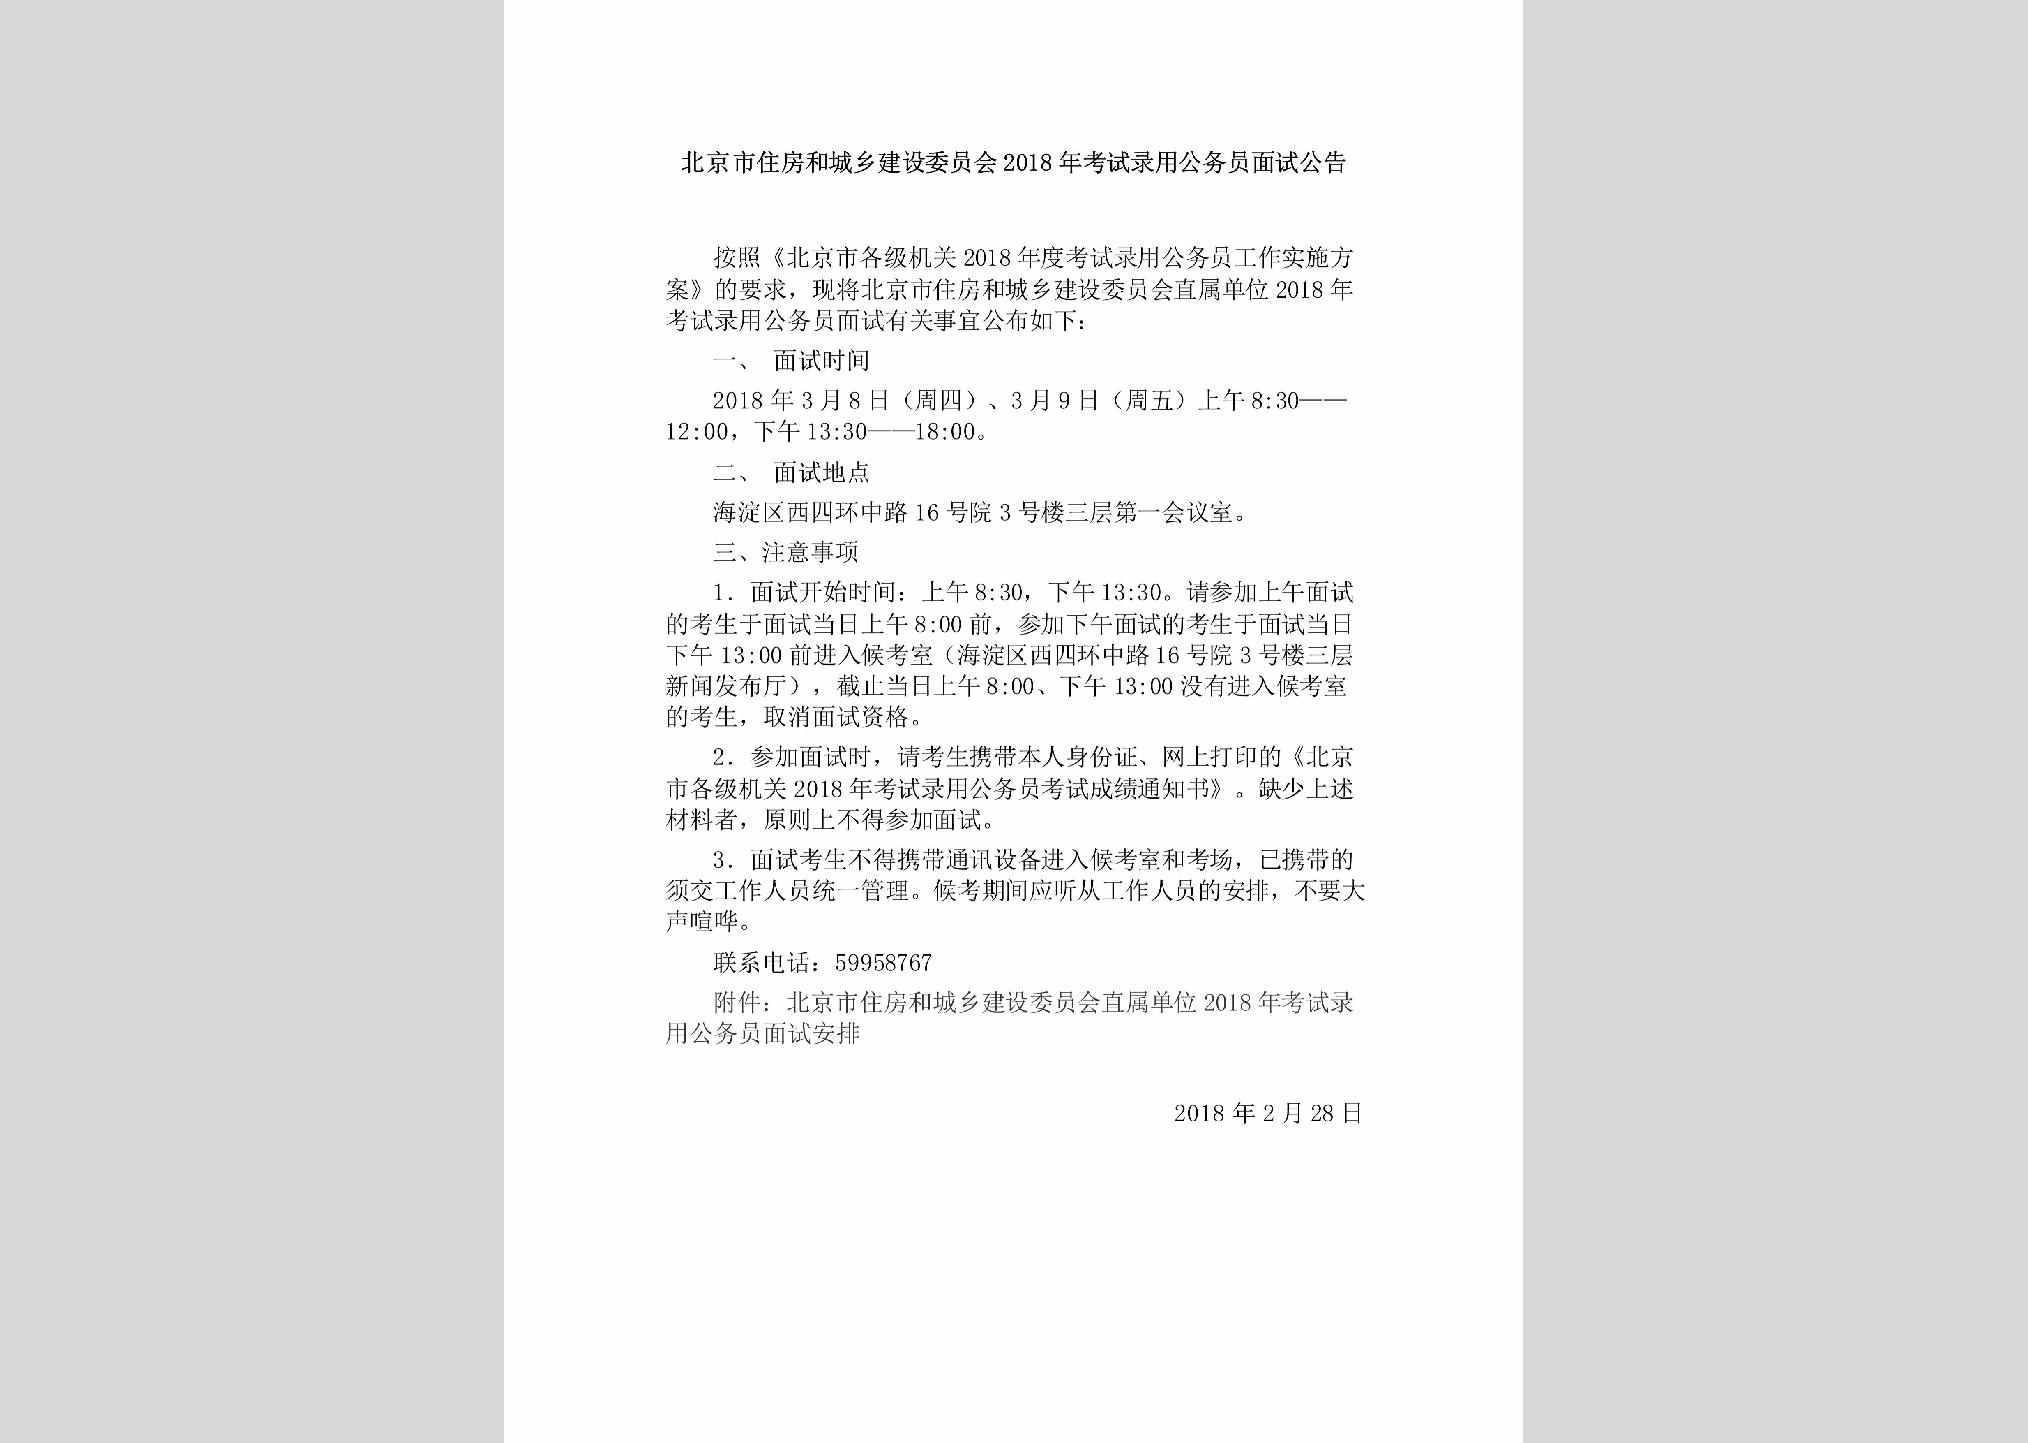 BJ-KSLYMSGG-2018：北京市住房和城乡建设委员会2018年考试录用公务员面试公告